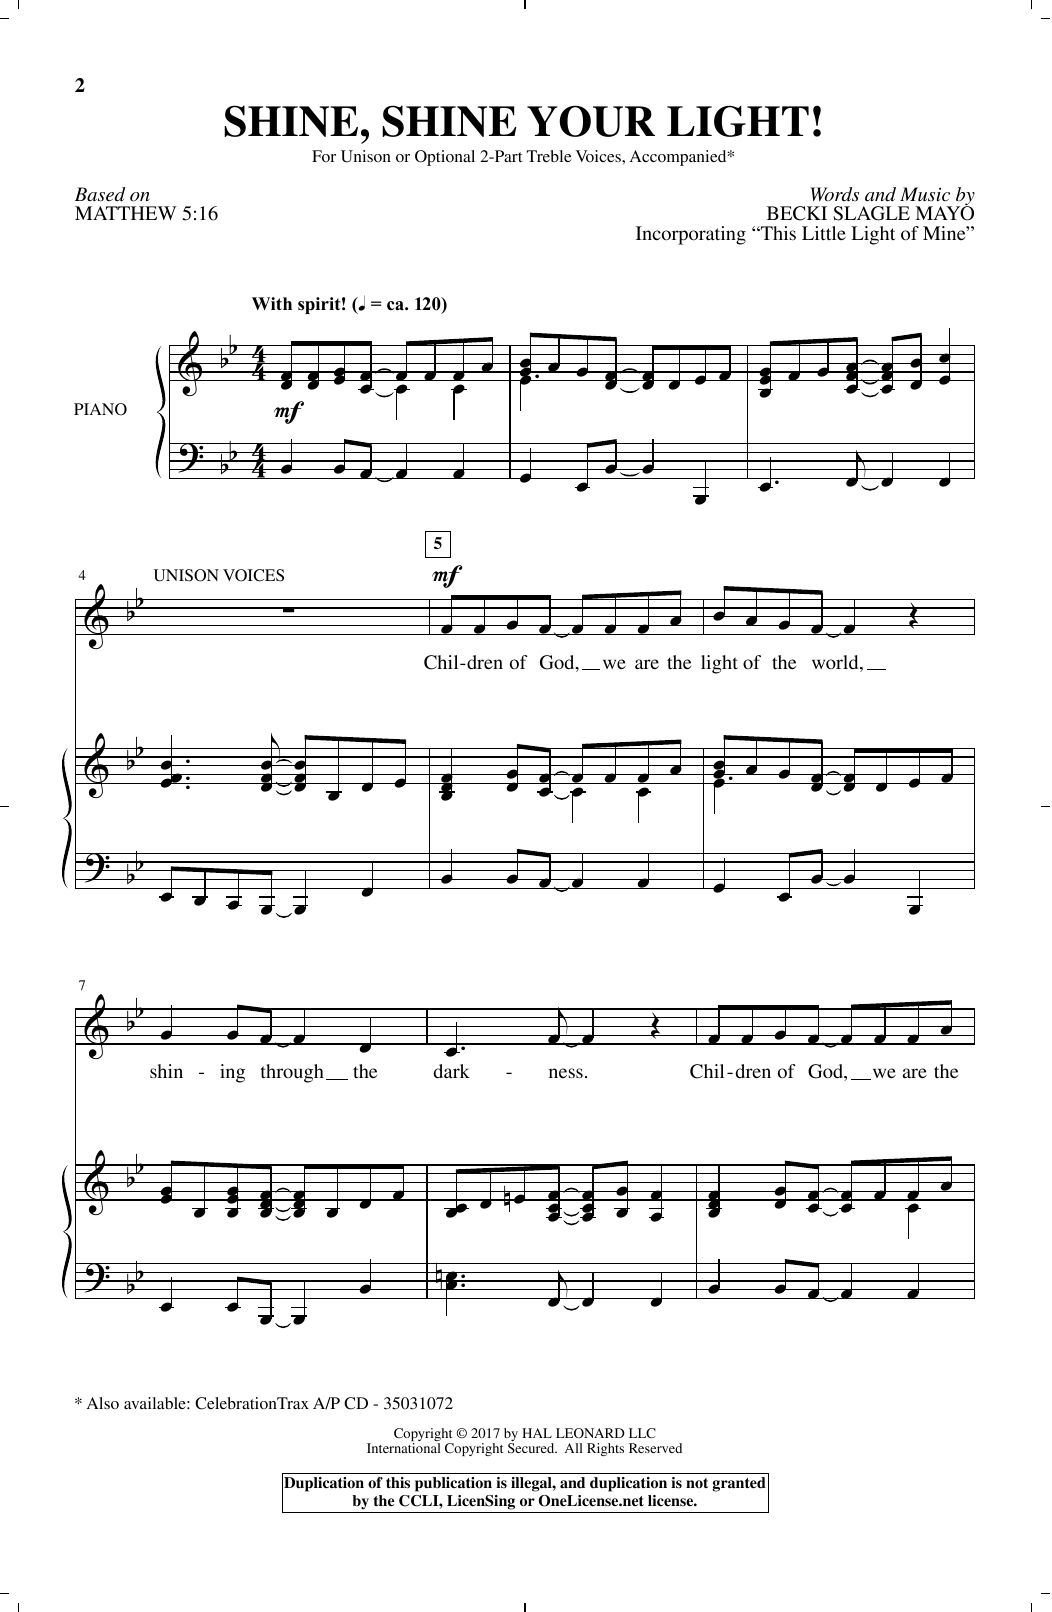 Becki Slagle Mayo Shine, Shine Your Light! sheet music notes and chords. Download Printable PDF.